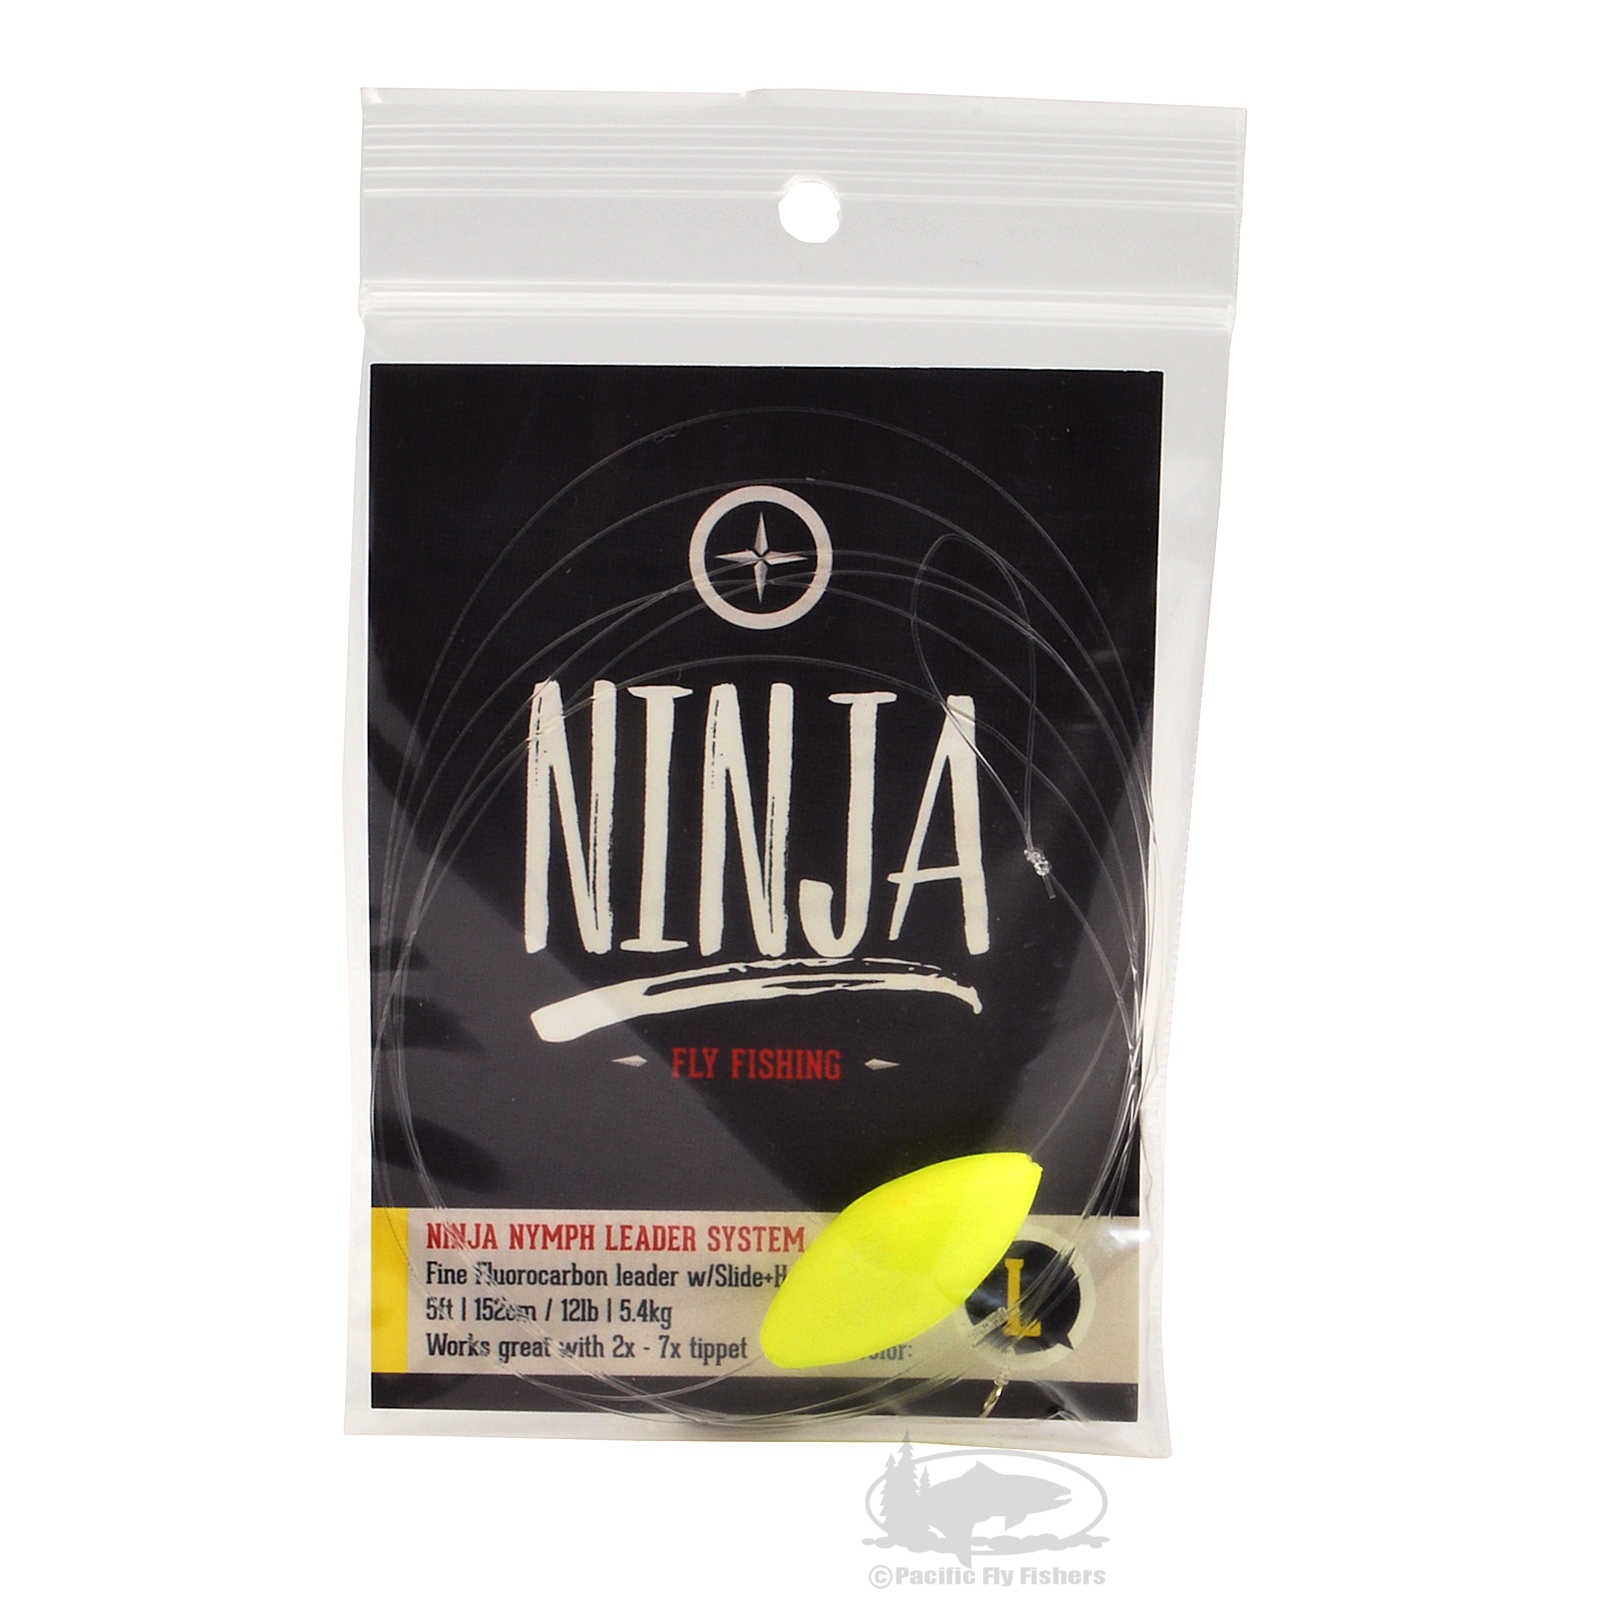 https://cdn.shopify.com/s/files/1/0211/7110/products/ninja-nymph-leader-system_-_yellow.jpg